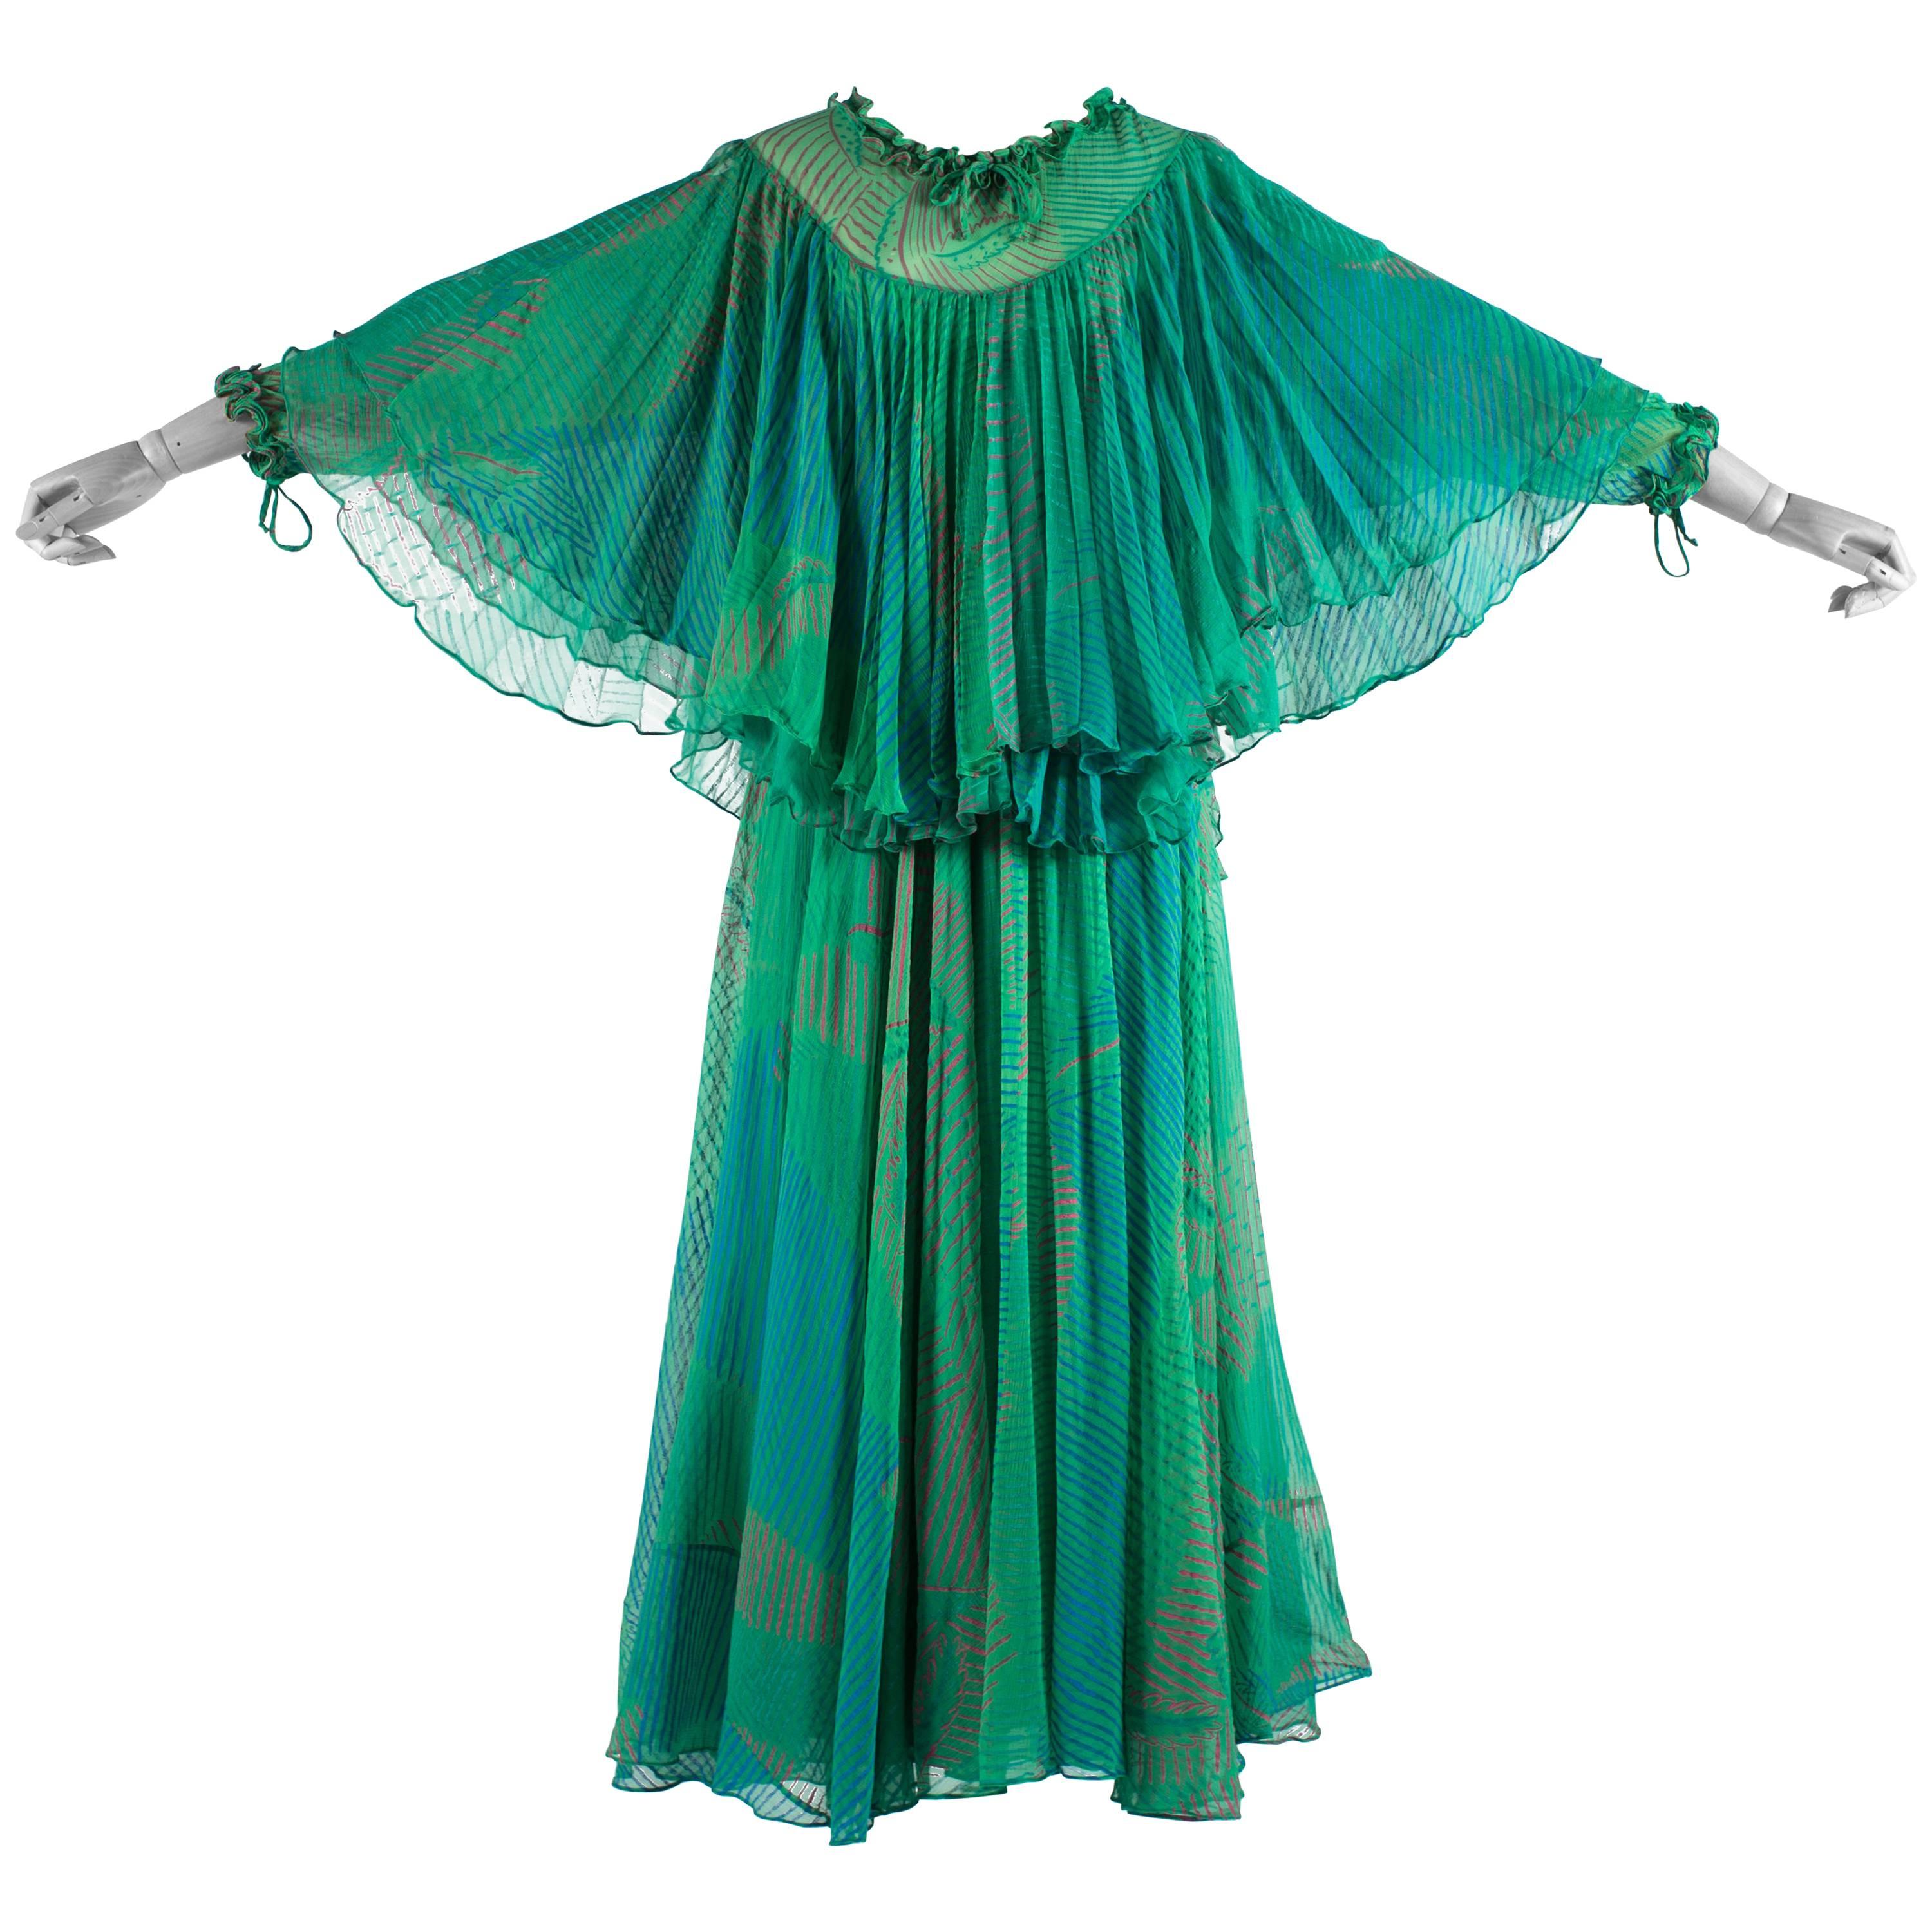 Ossie Clark green silk evening dress with print by Celia Birtwell, c. 1976